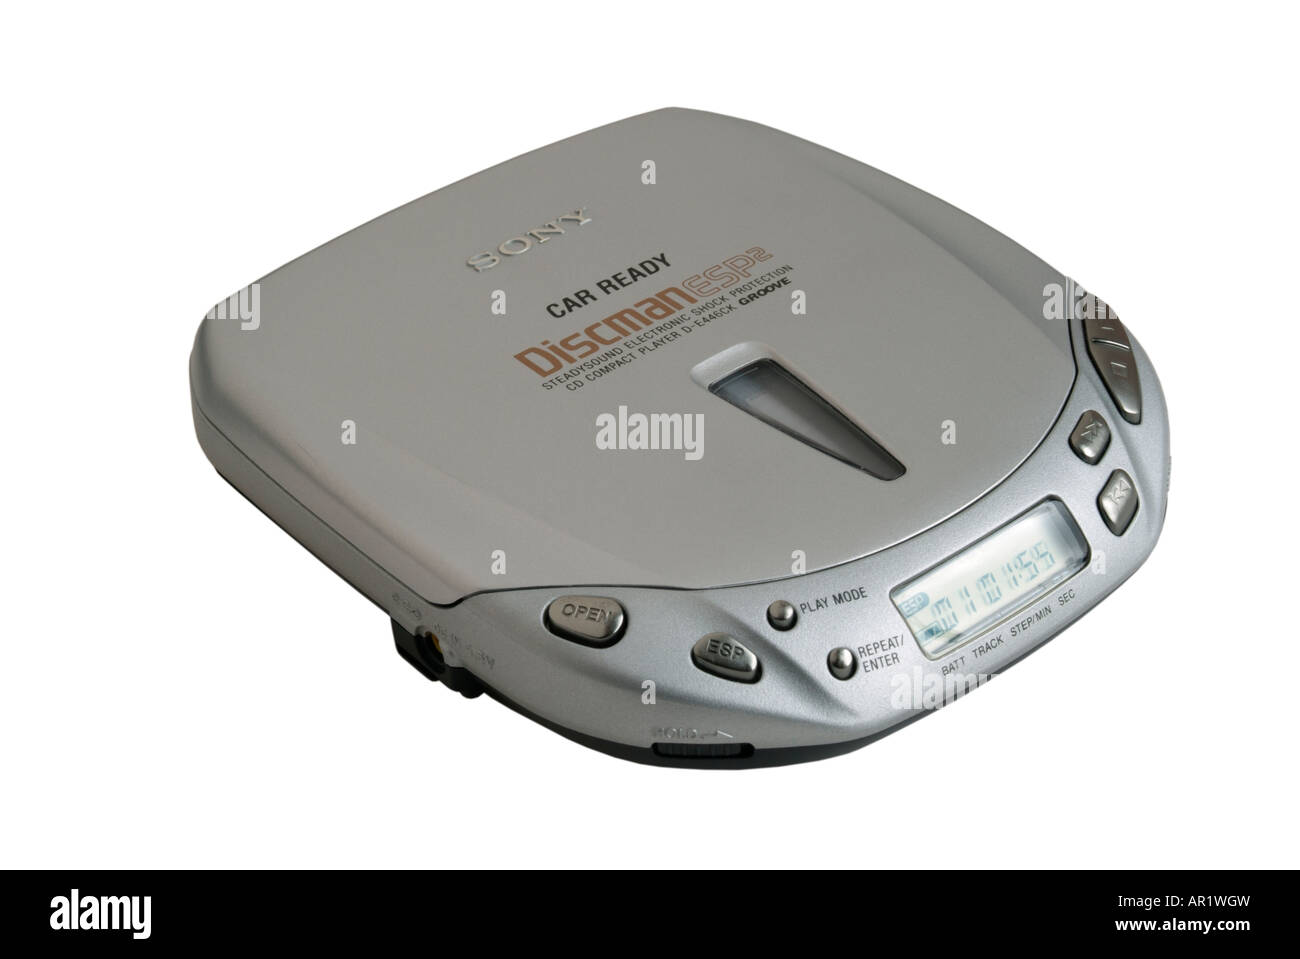 Sony Discman D-E446CK compact disc player Stock Photo